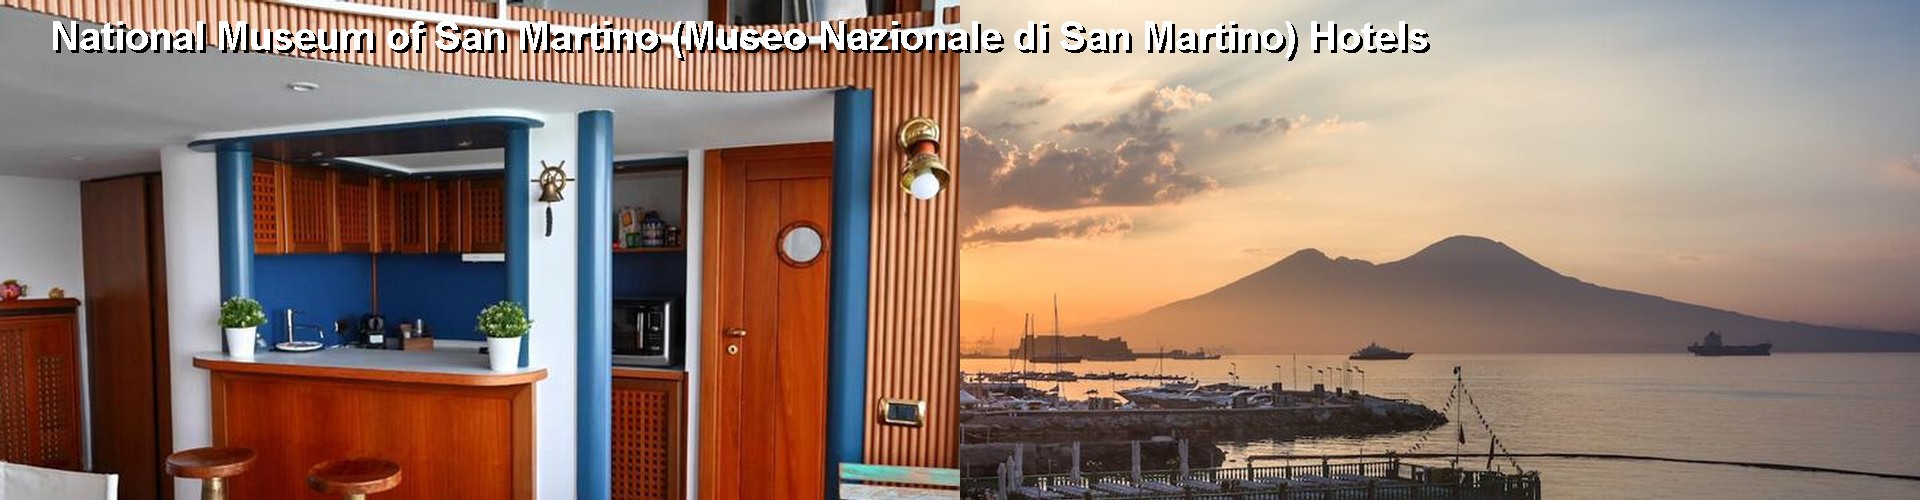 5 Best Hotels near National Museum of San Martino (Museo Nazionale di San Martino)